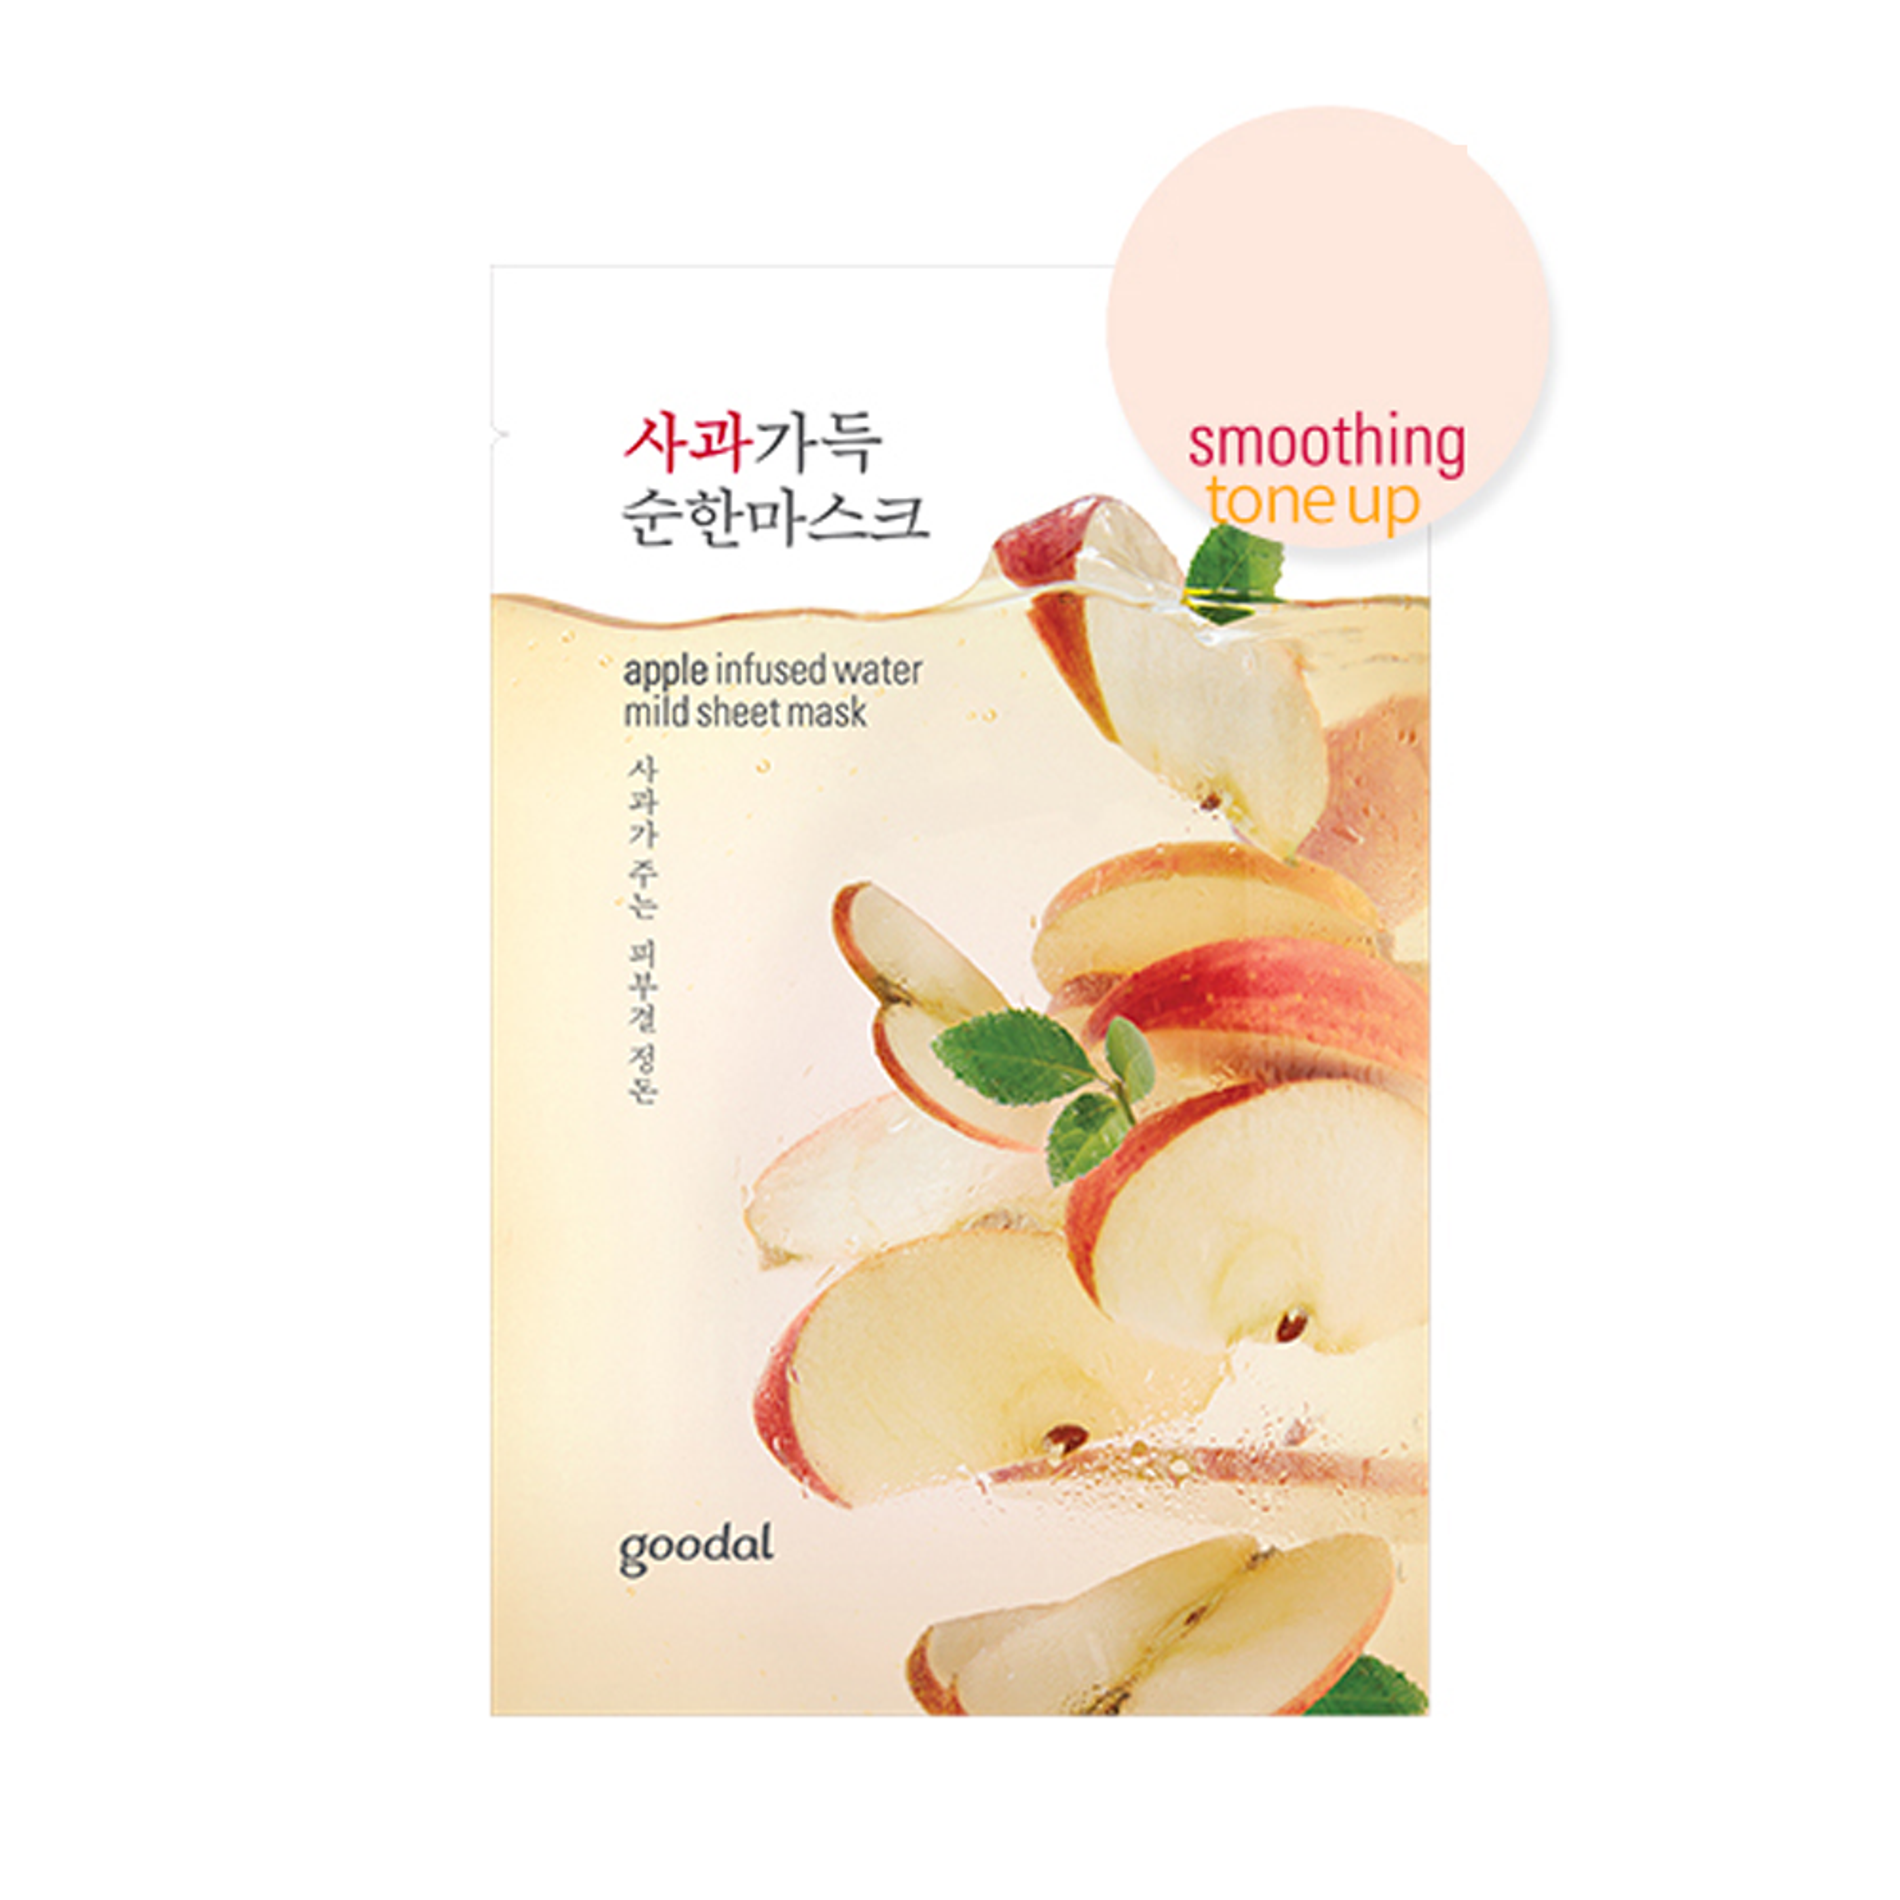 mat-na-diu-mat-thanh-loc-da-goodal-apple-infused-water-mild-sheet-mask-2